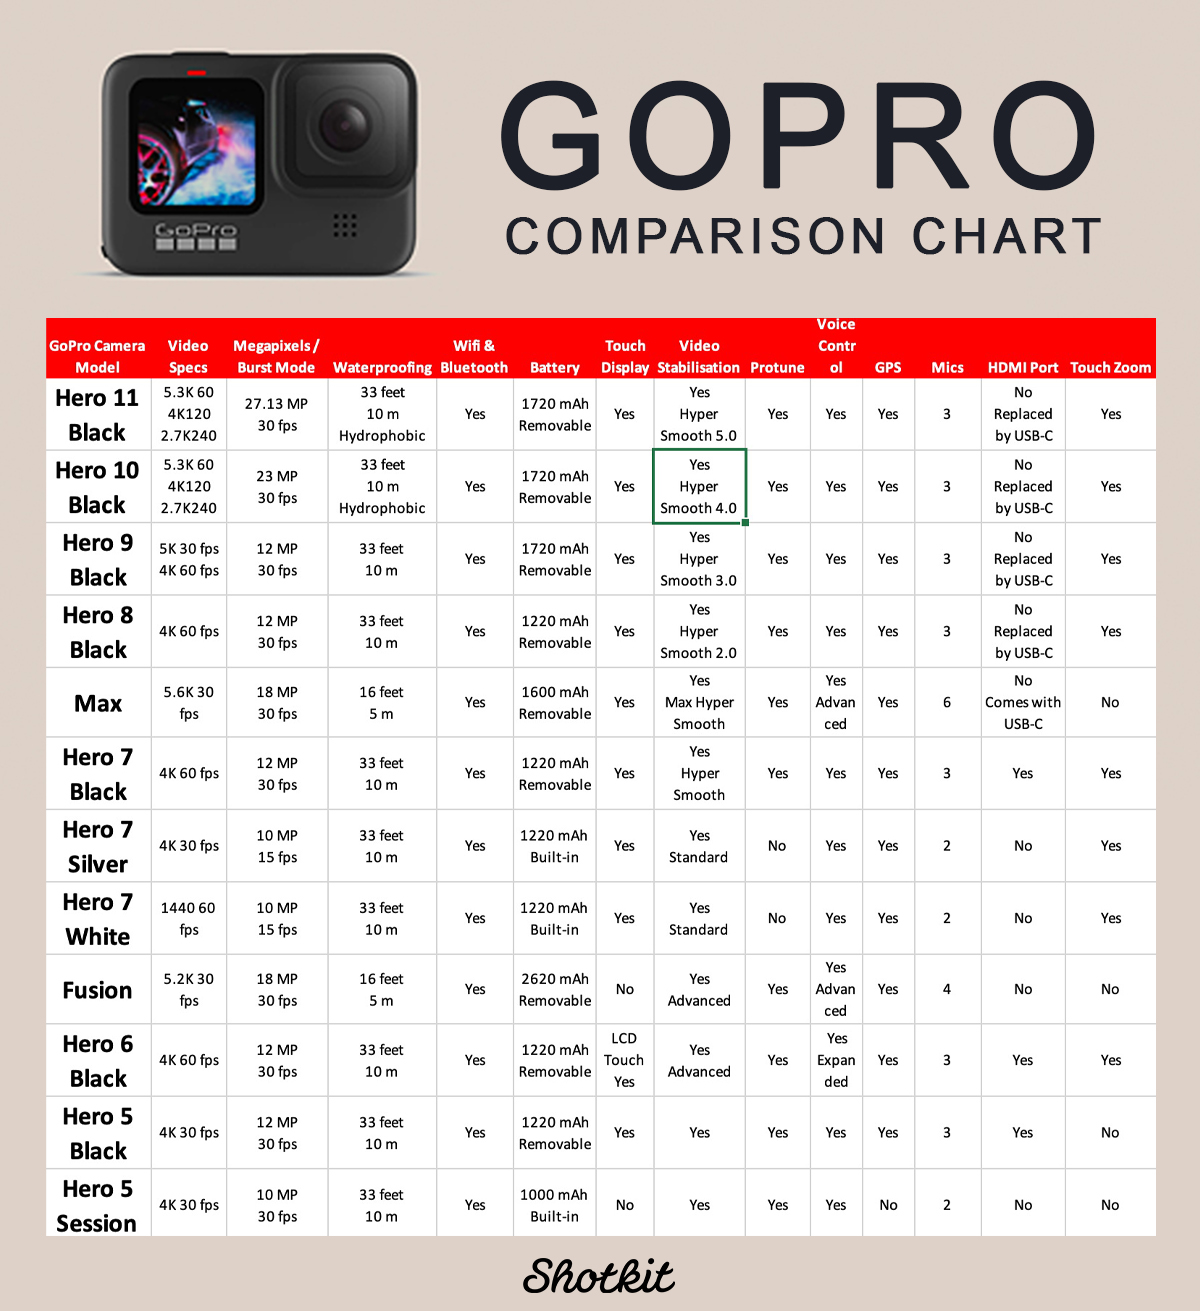 Comparison of all GoPro models